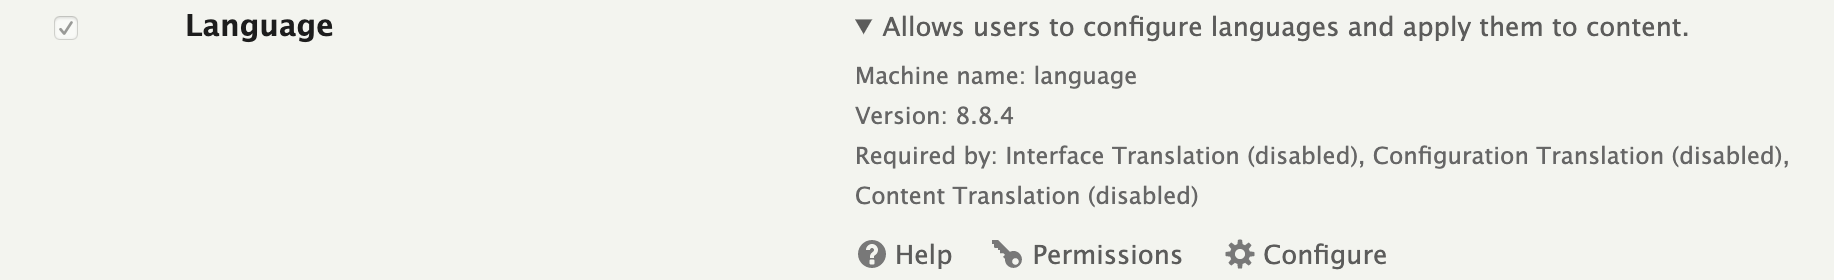 screenshot of Drupal 8 backend for choosing languages 